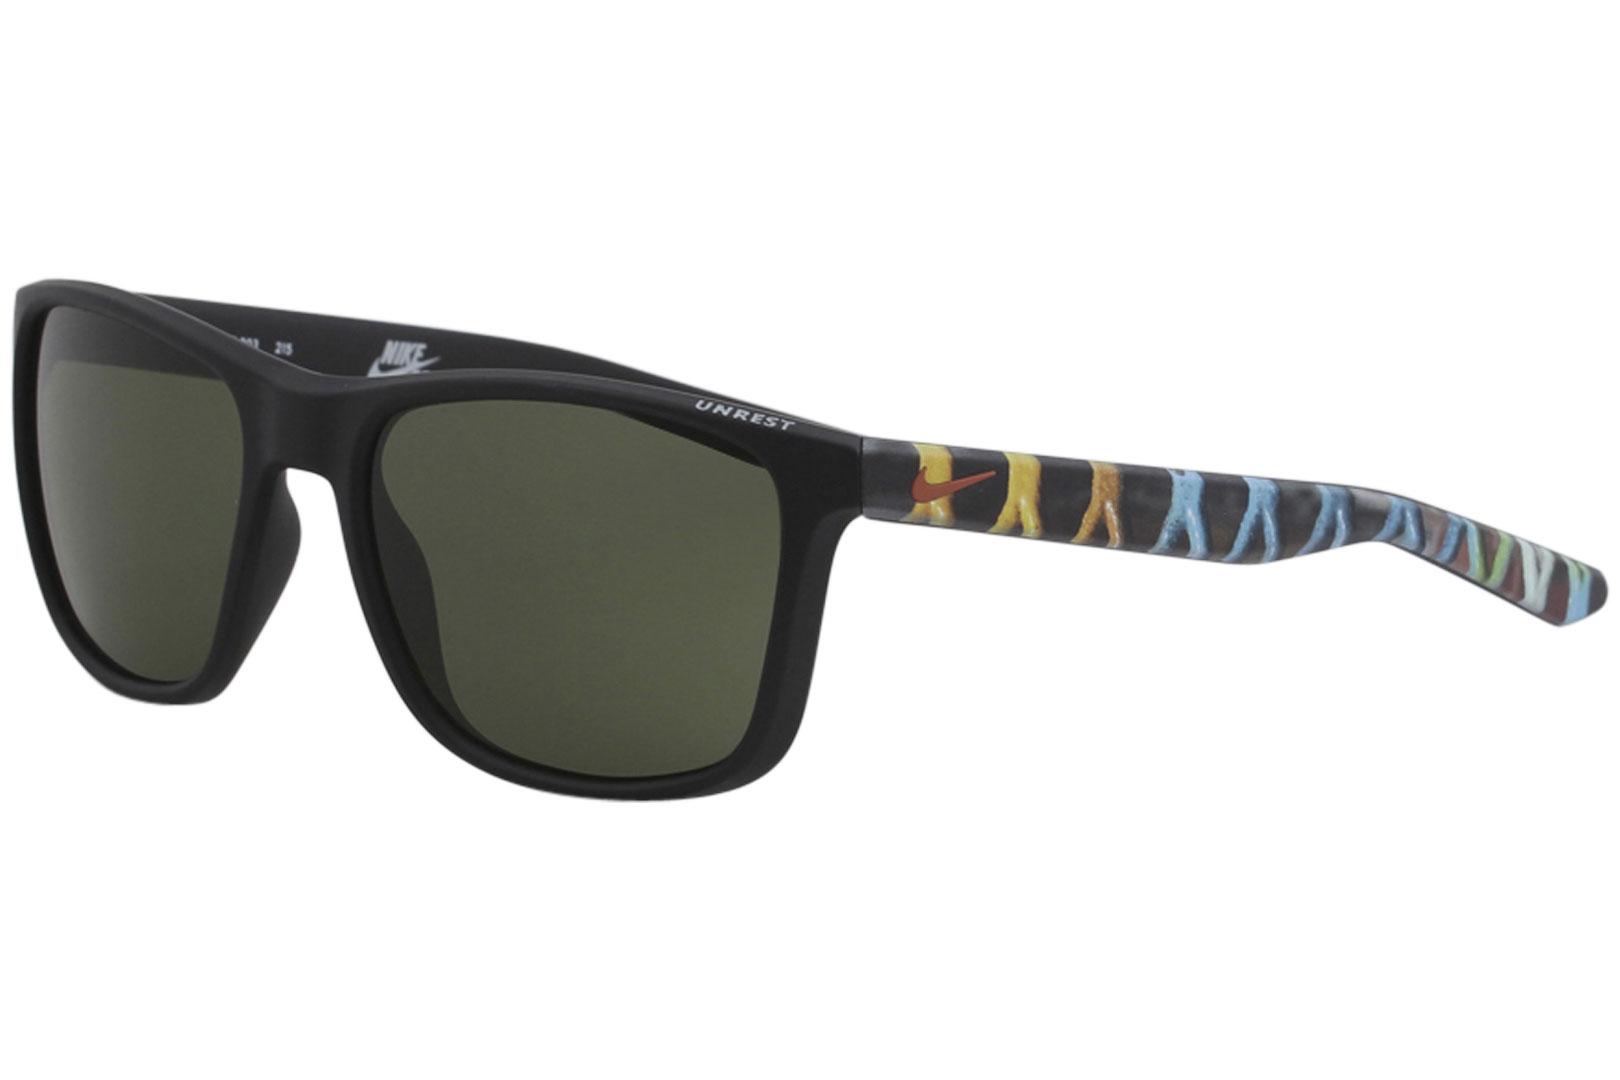 Nike SB Men's Unrest Square Sunglasses - Matte Black Cinnabar/Green   003 - Lens 57 Bridge 19 Temple 145mm